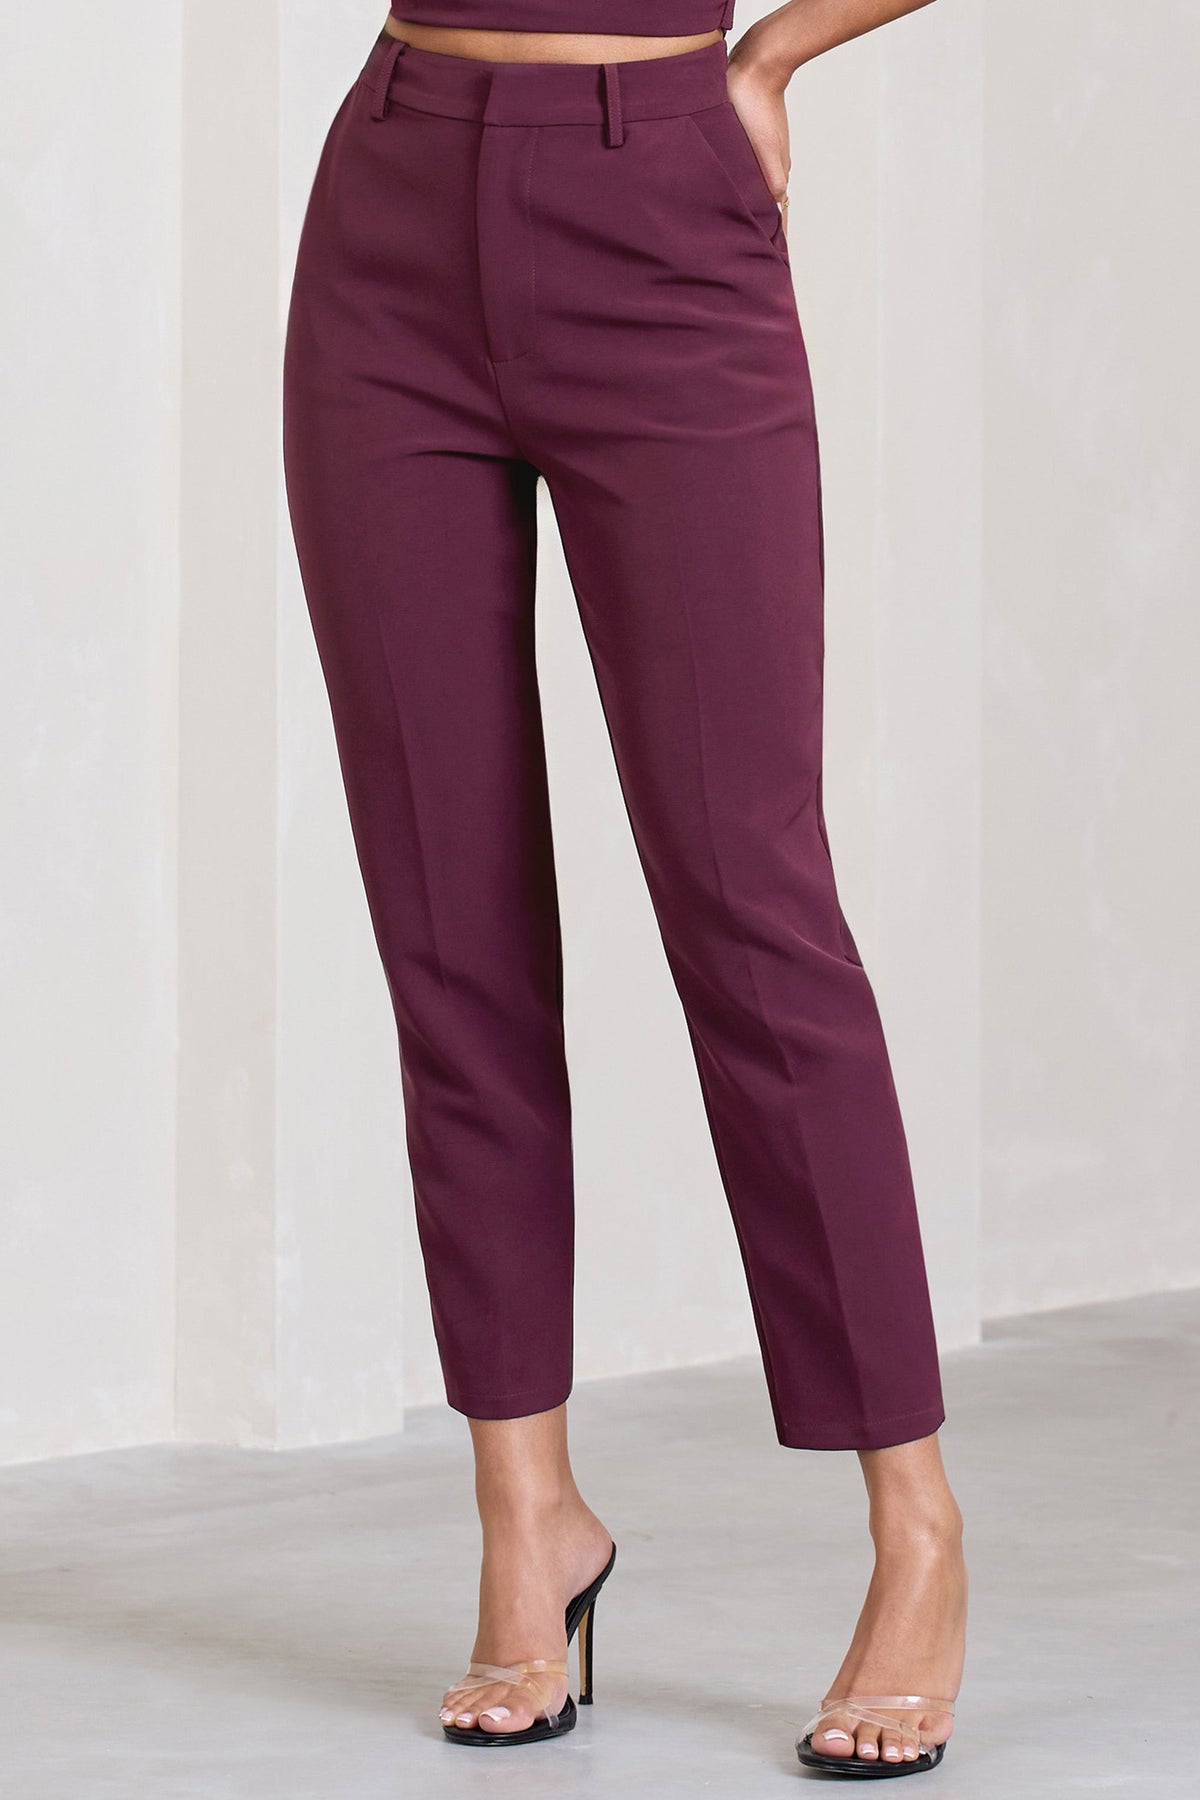 Missguided Ella Floral Print Cigarette Trousers Purple, $16 | Missguided |  Lookastic